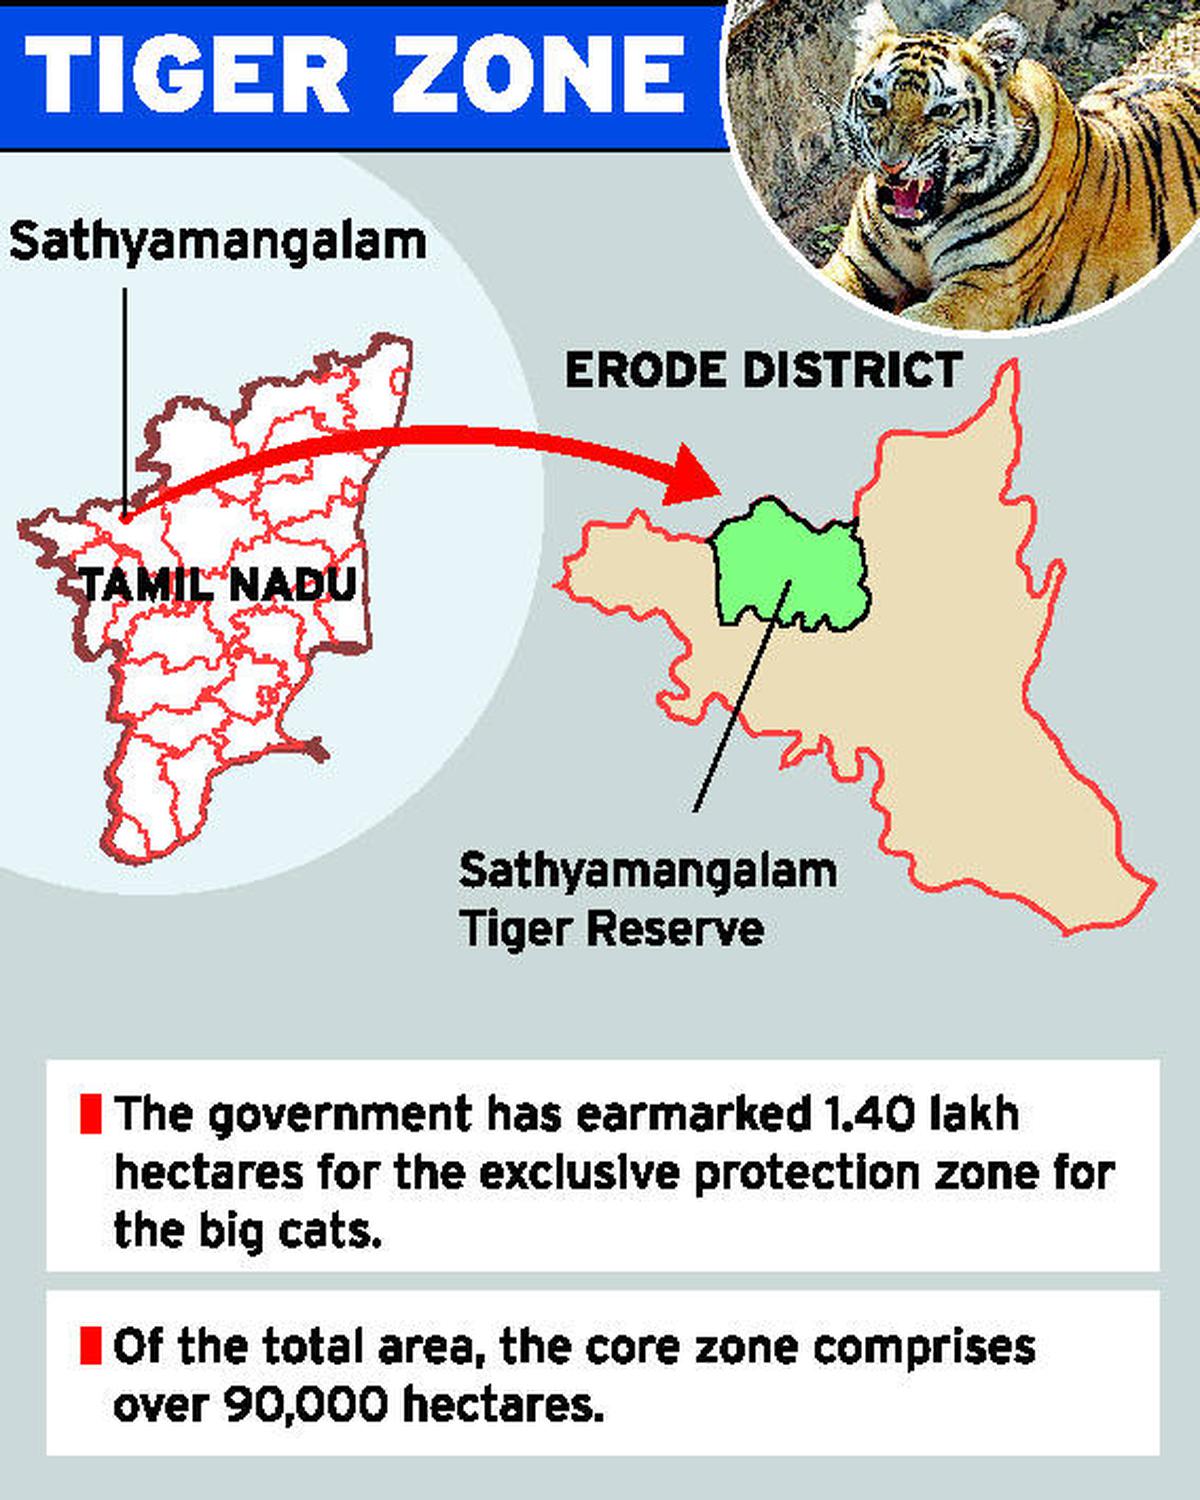 Sathyamangalam Forest declared Tiger Reserve | Tamil Nadu News - The Hindu